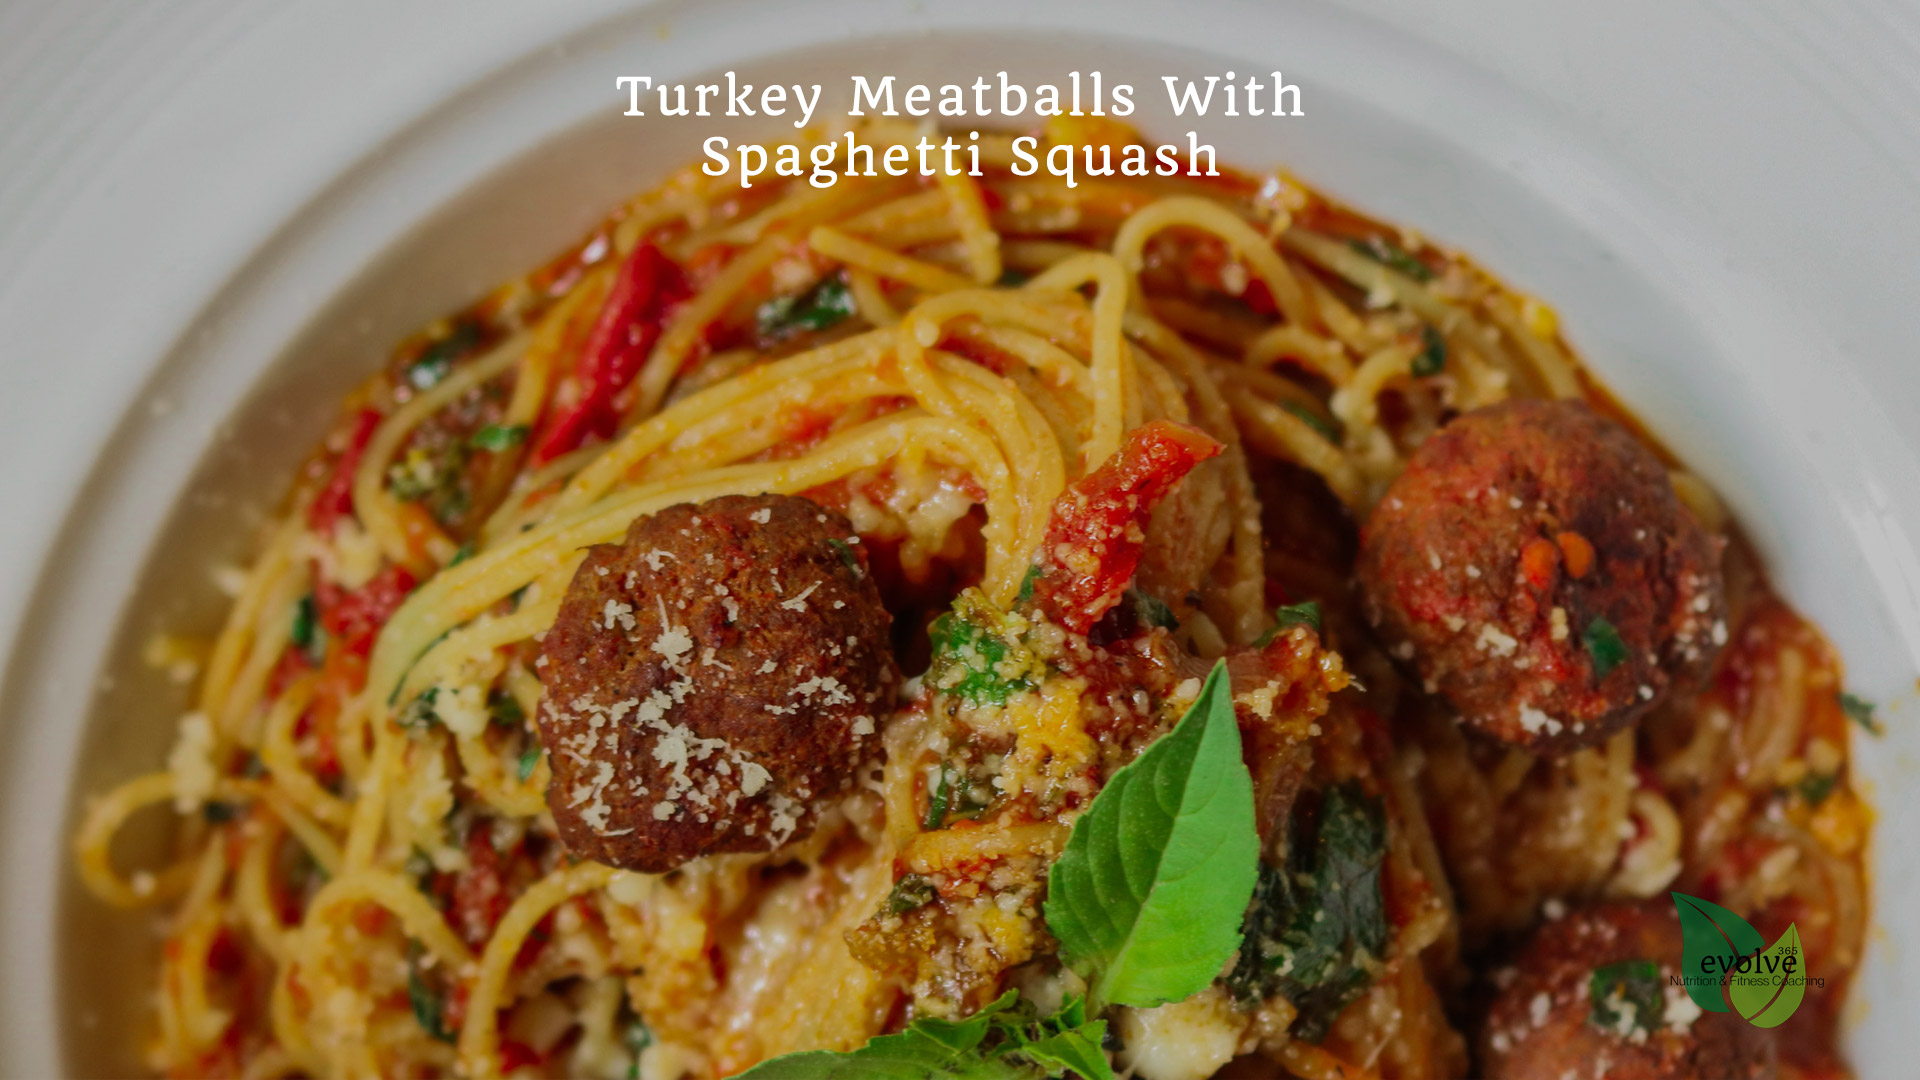 Turkey Meatballs With Spaghetti Squash Featured Edited